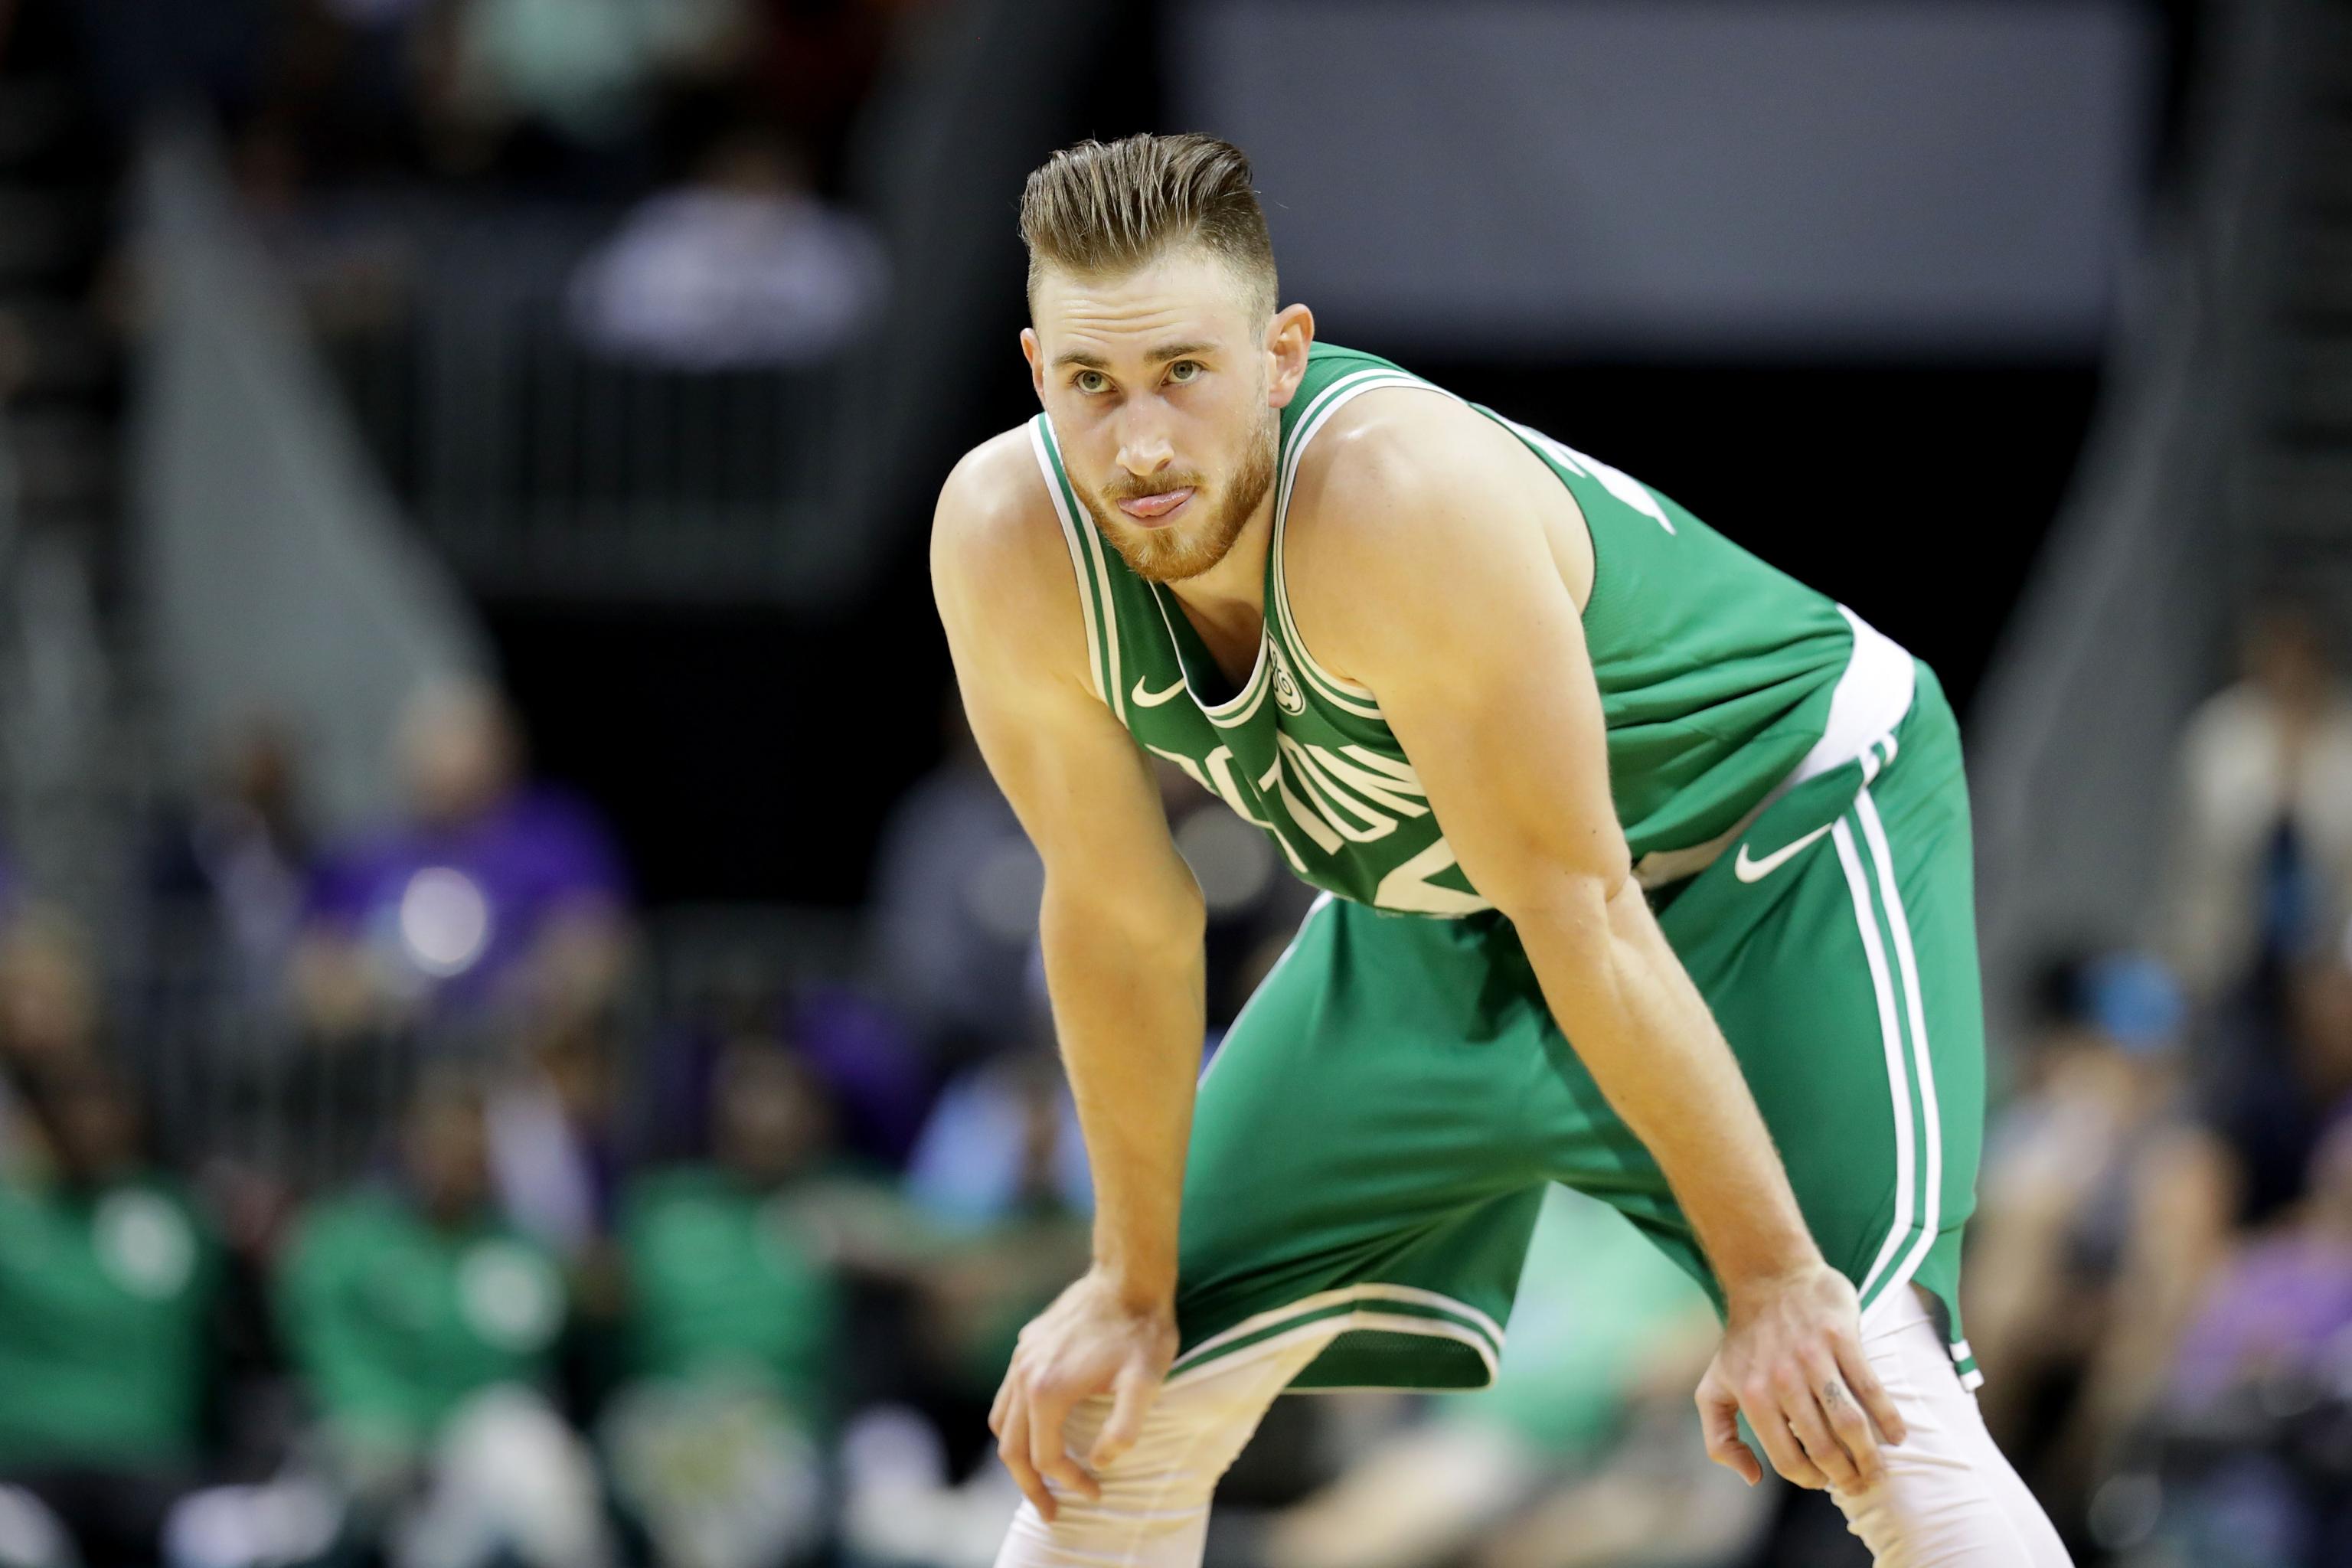 Gordon Hayward scores 10 points for Celtics in return from